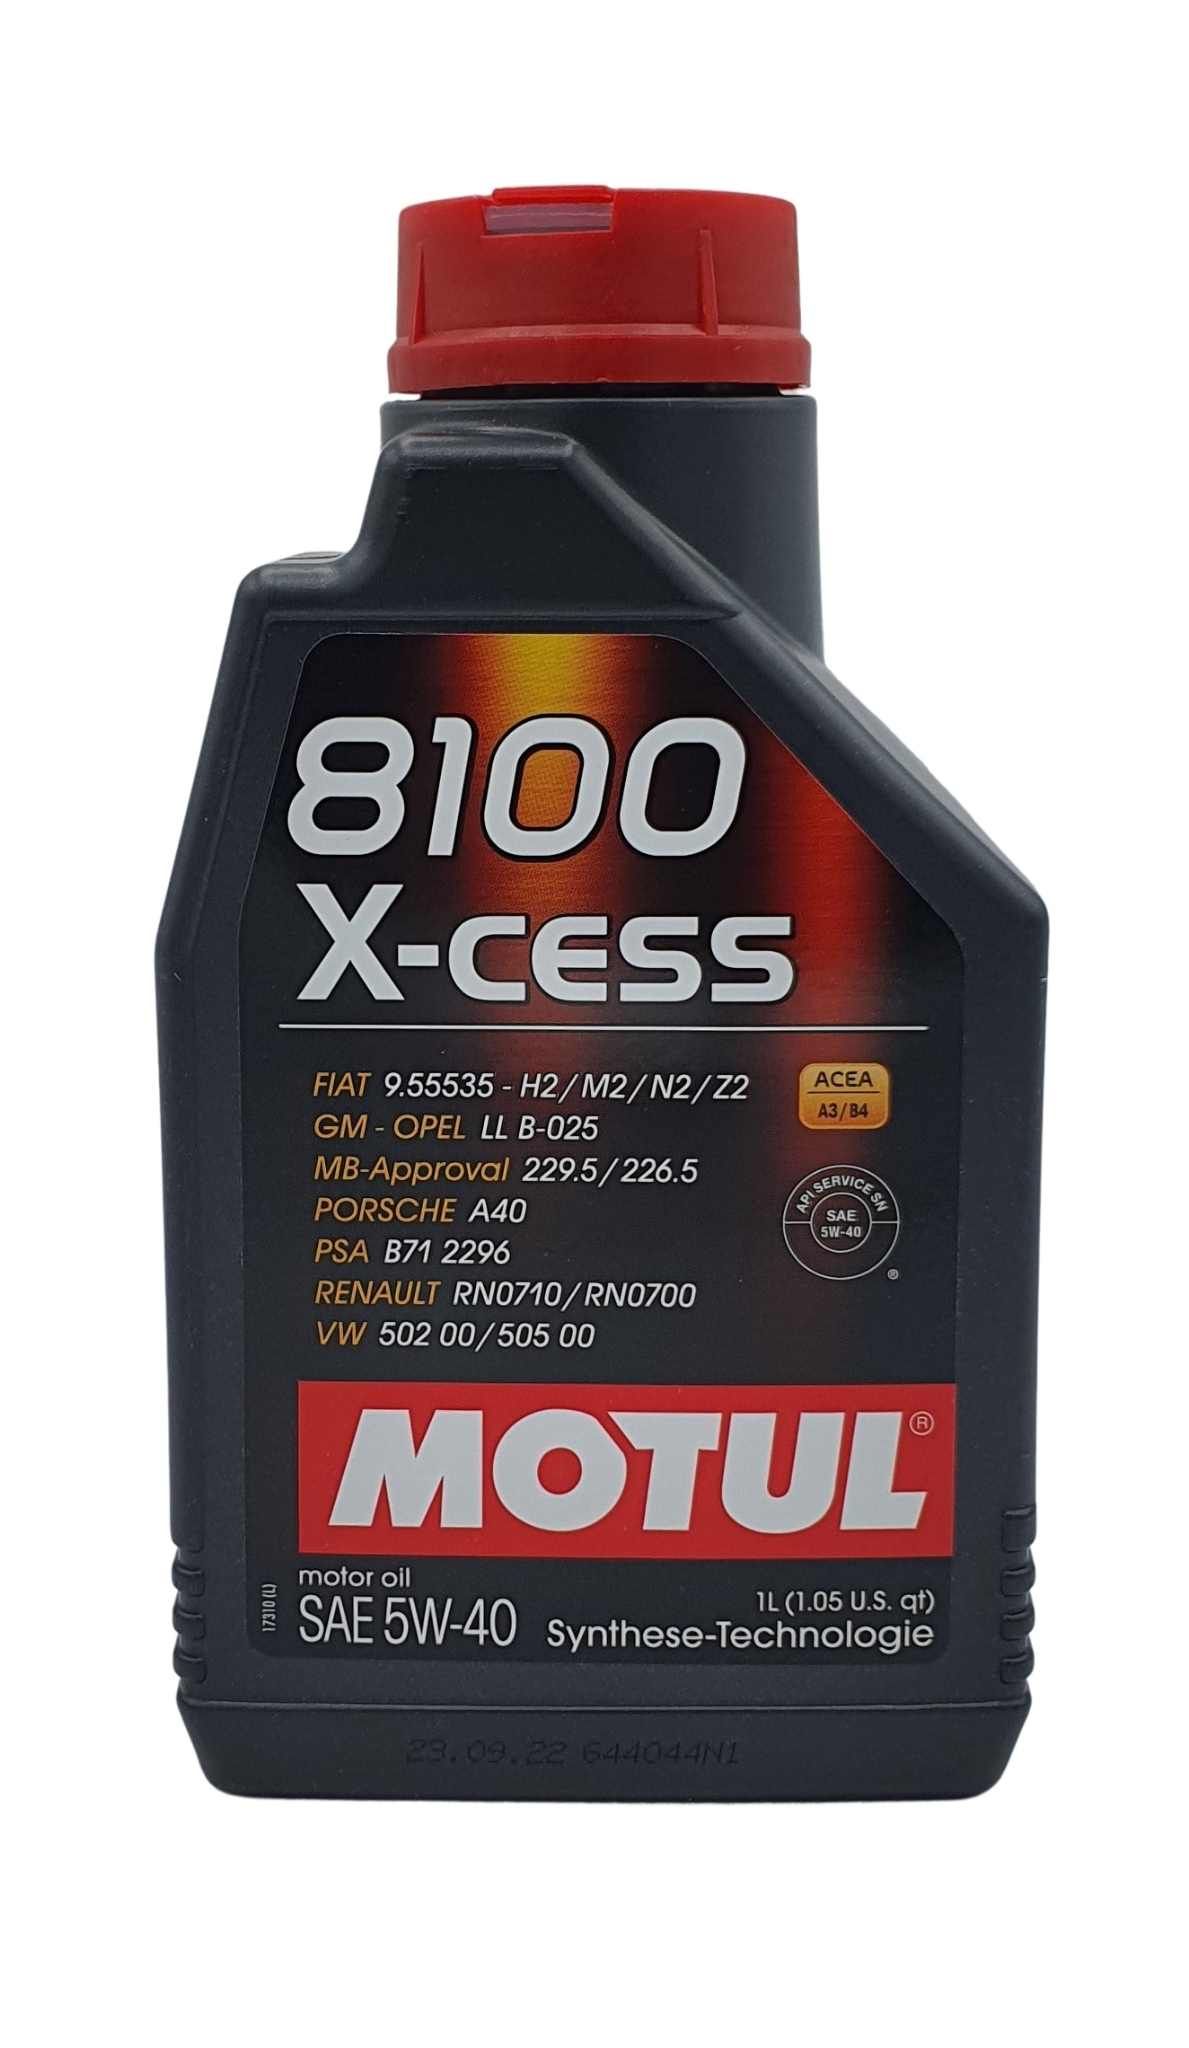 Motul 8100 X-cess GEN2 5W-40 1 Liter